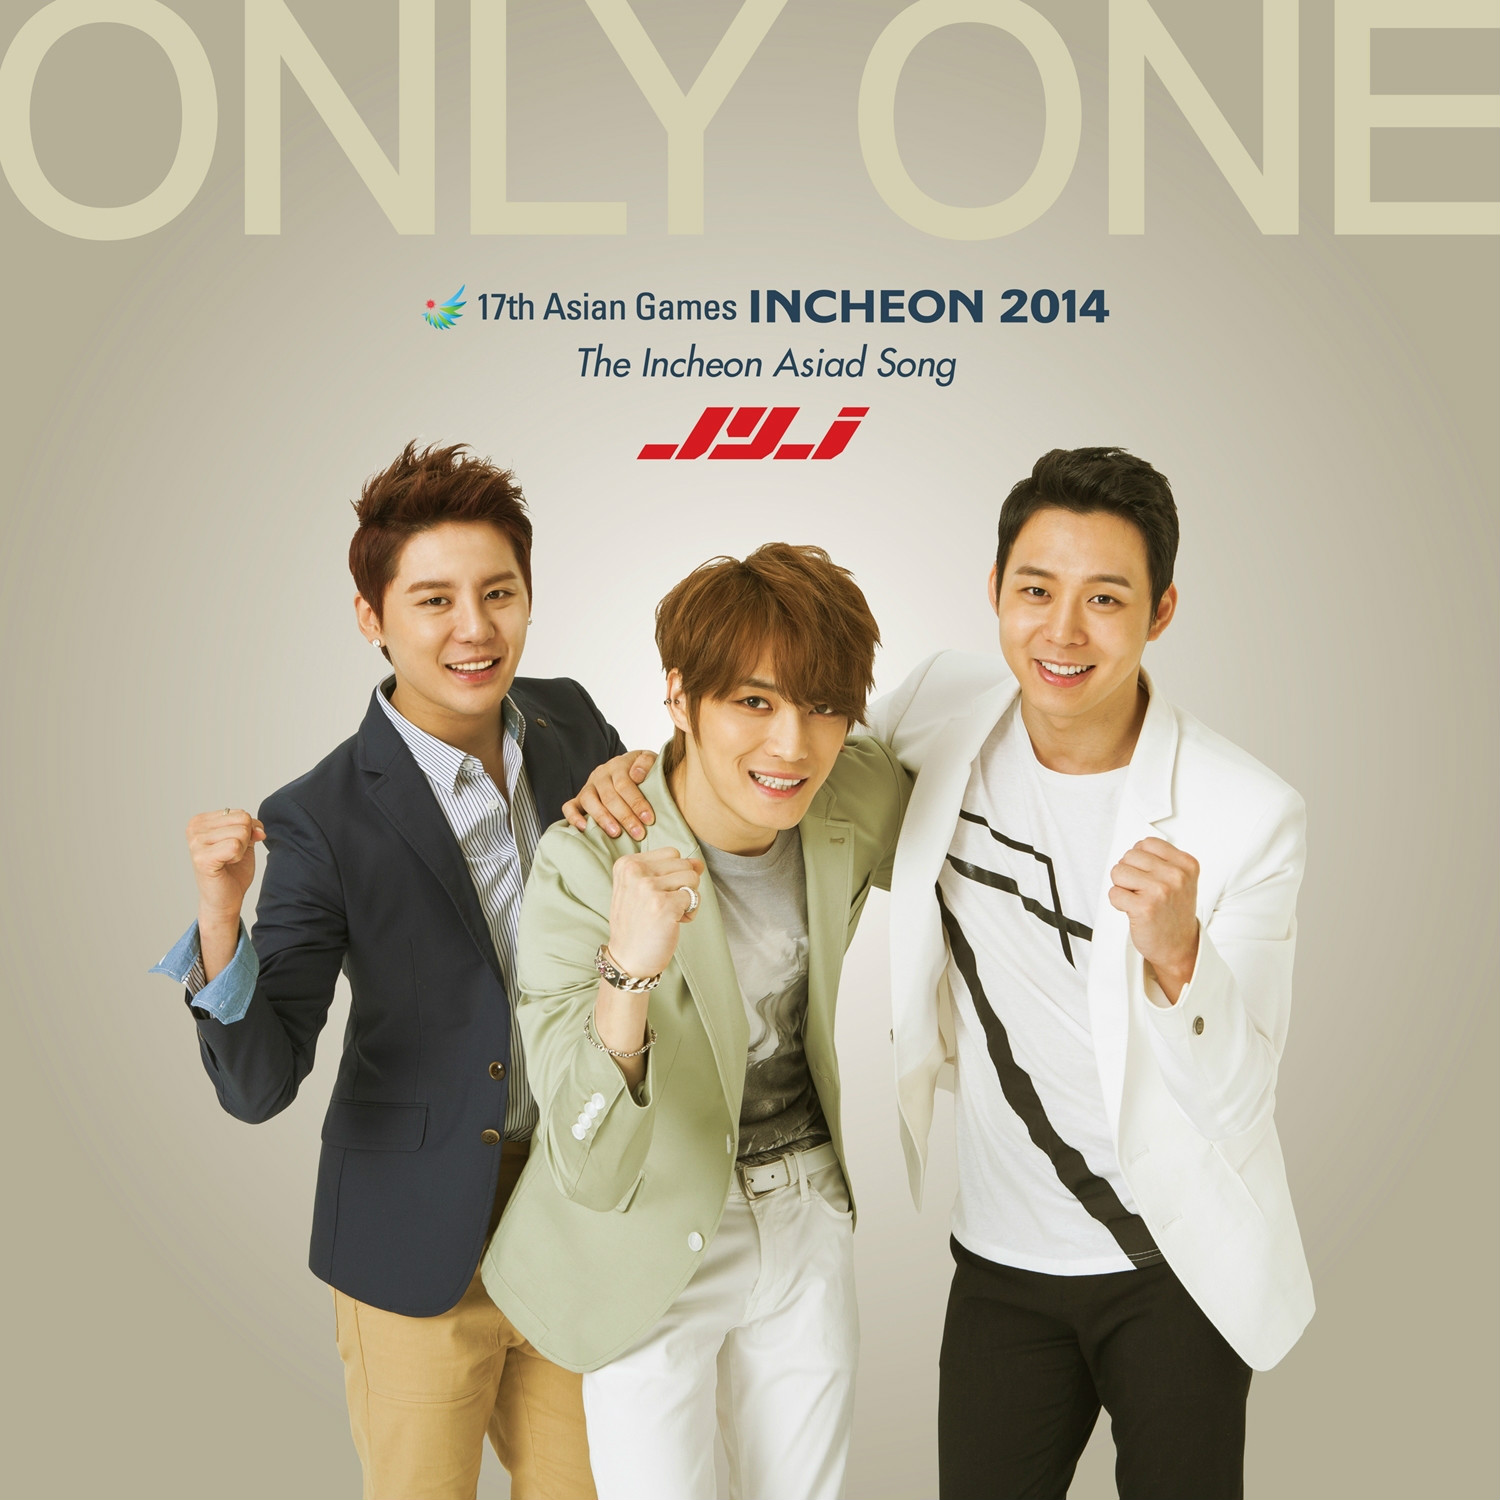 only one(JYJ演唱的2014年仁川亞運會主題曲《Only One》)